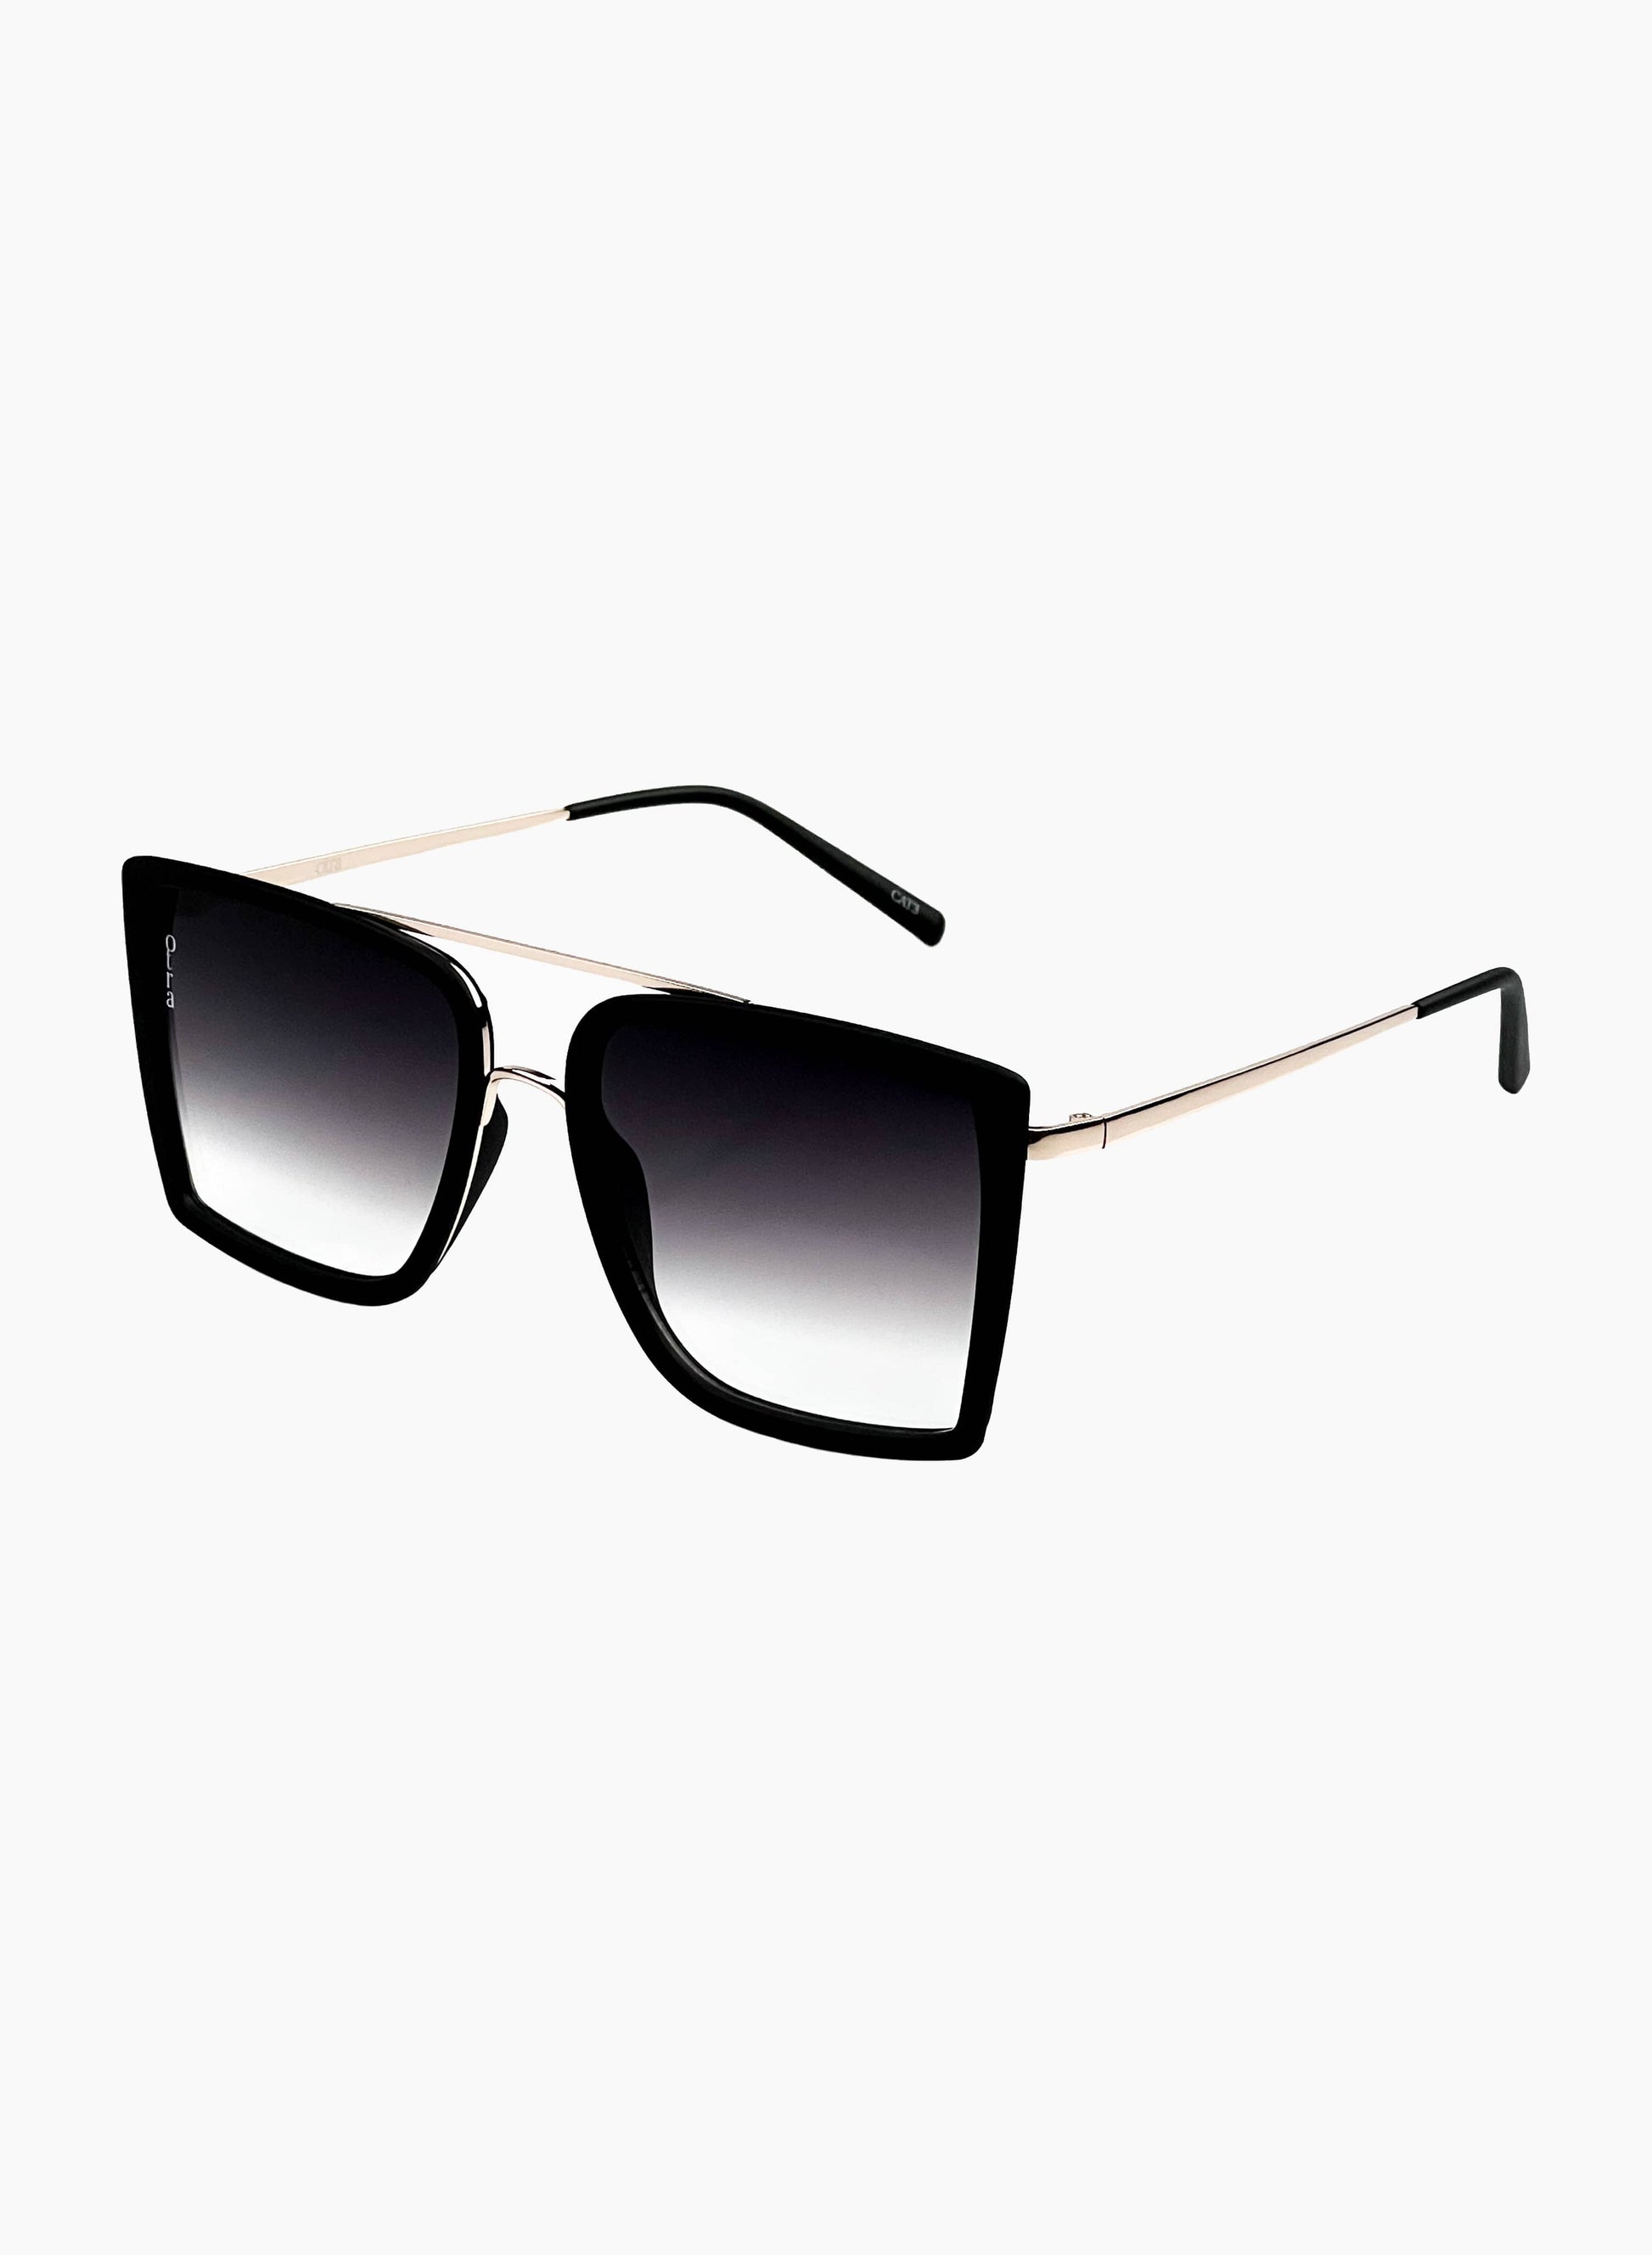 Product view Velda oversized square sunglasses in black